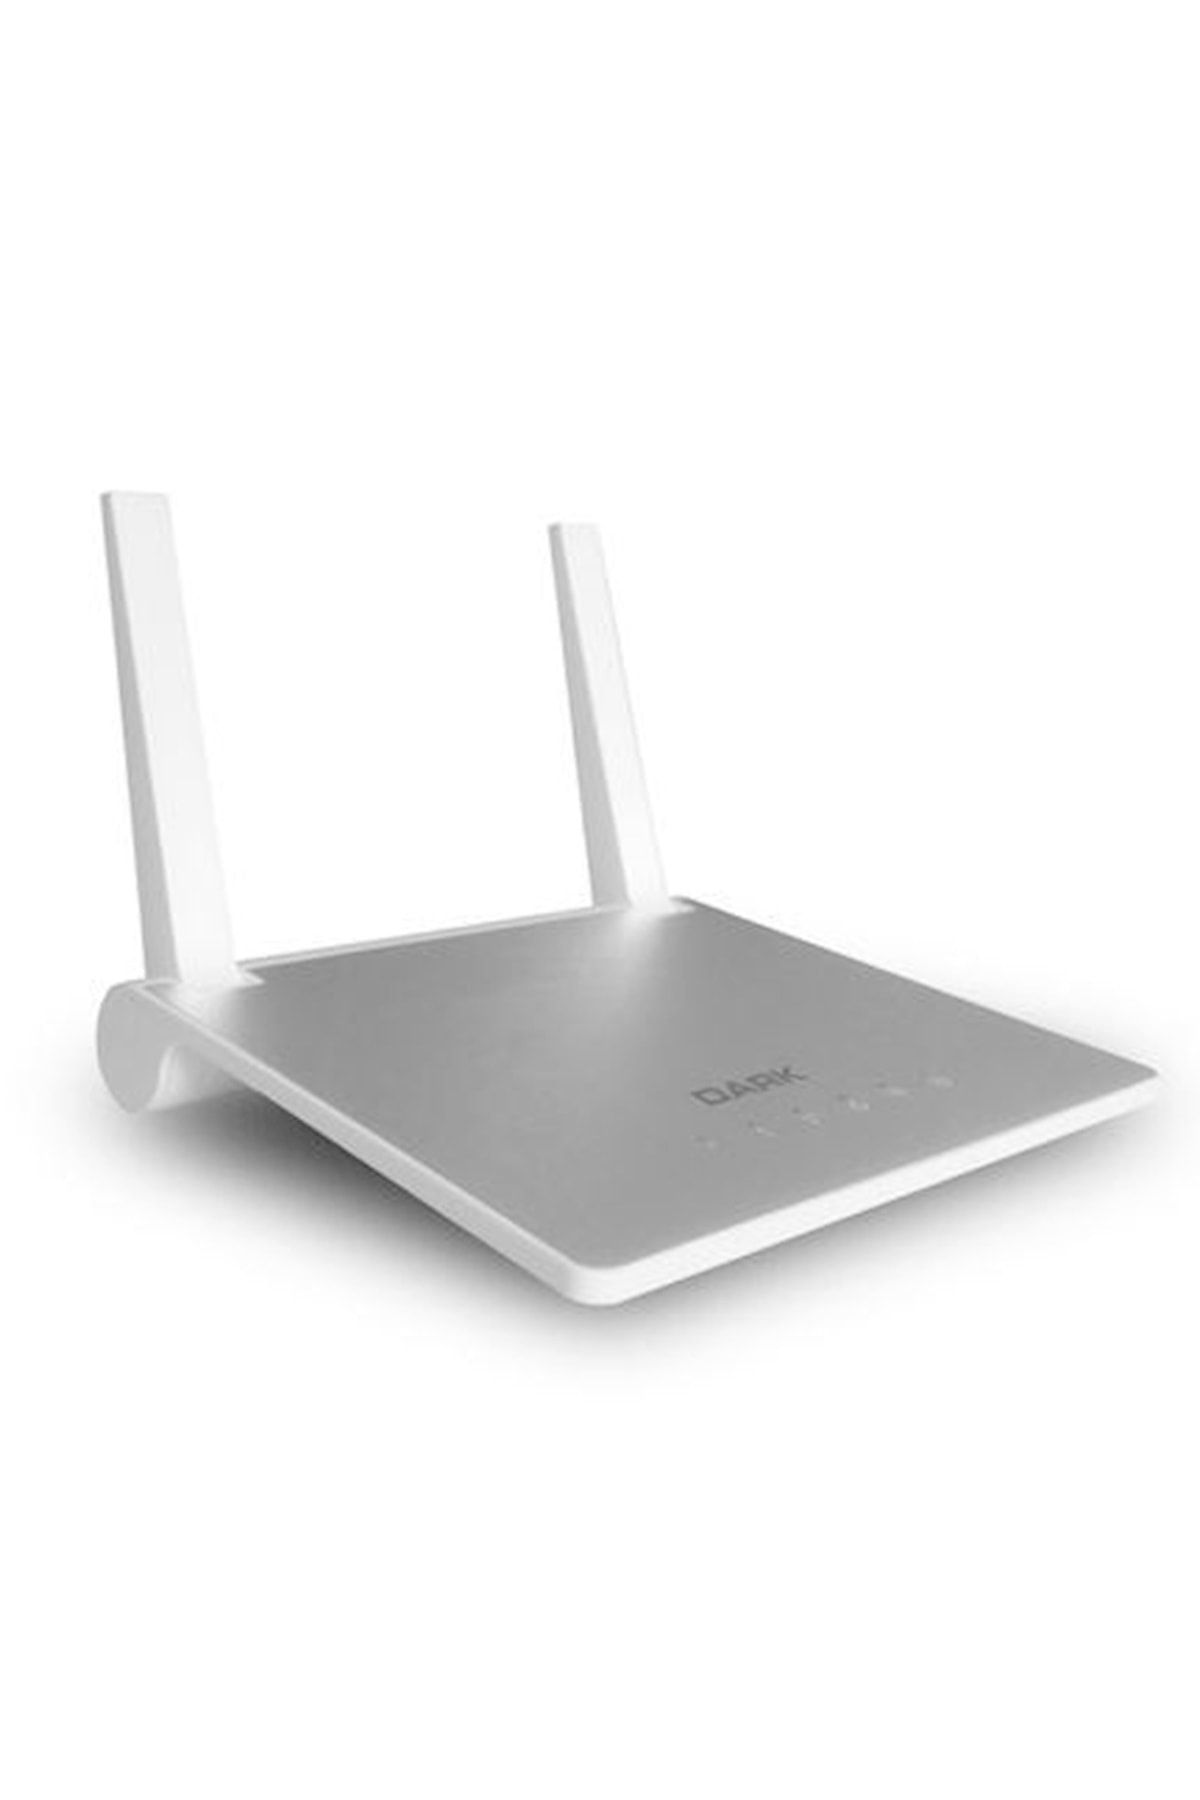 Dark Dk-nt-wrt305 Rangemax 802.11n Wifi 2x5 2 Antenli Router/ap